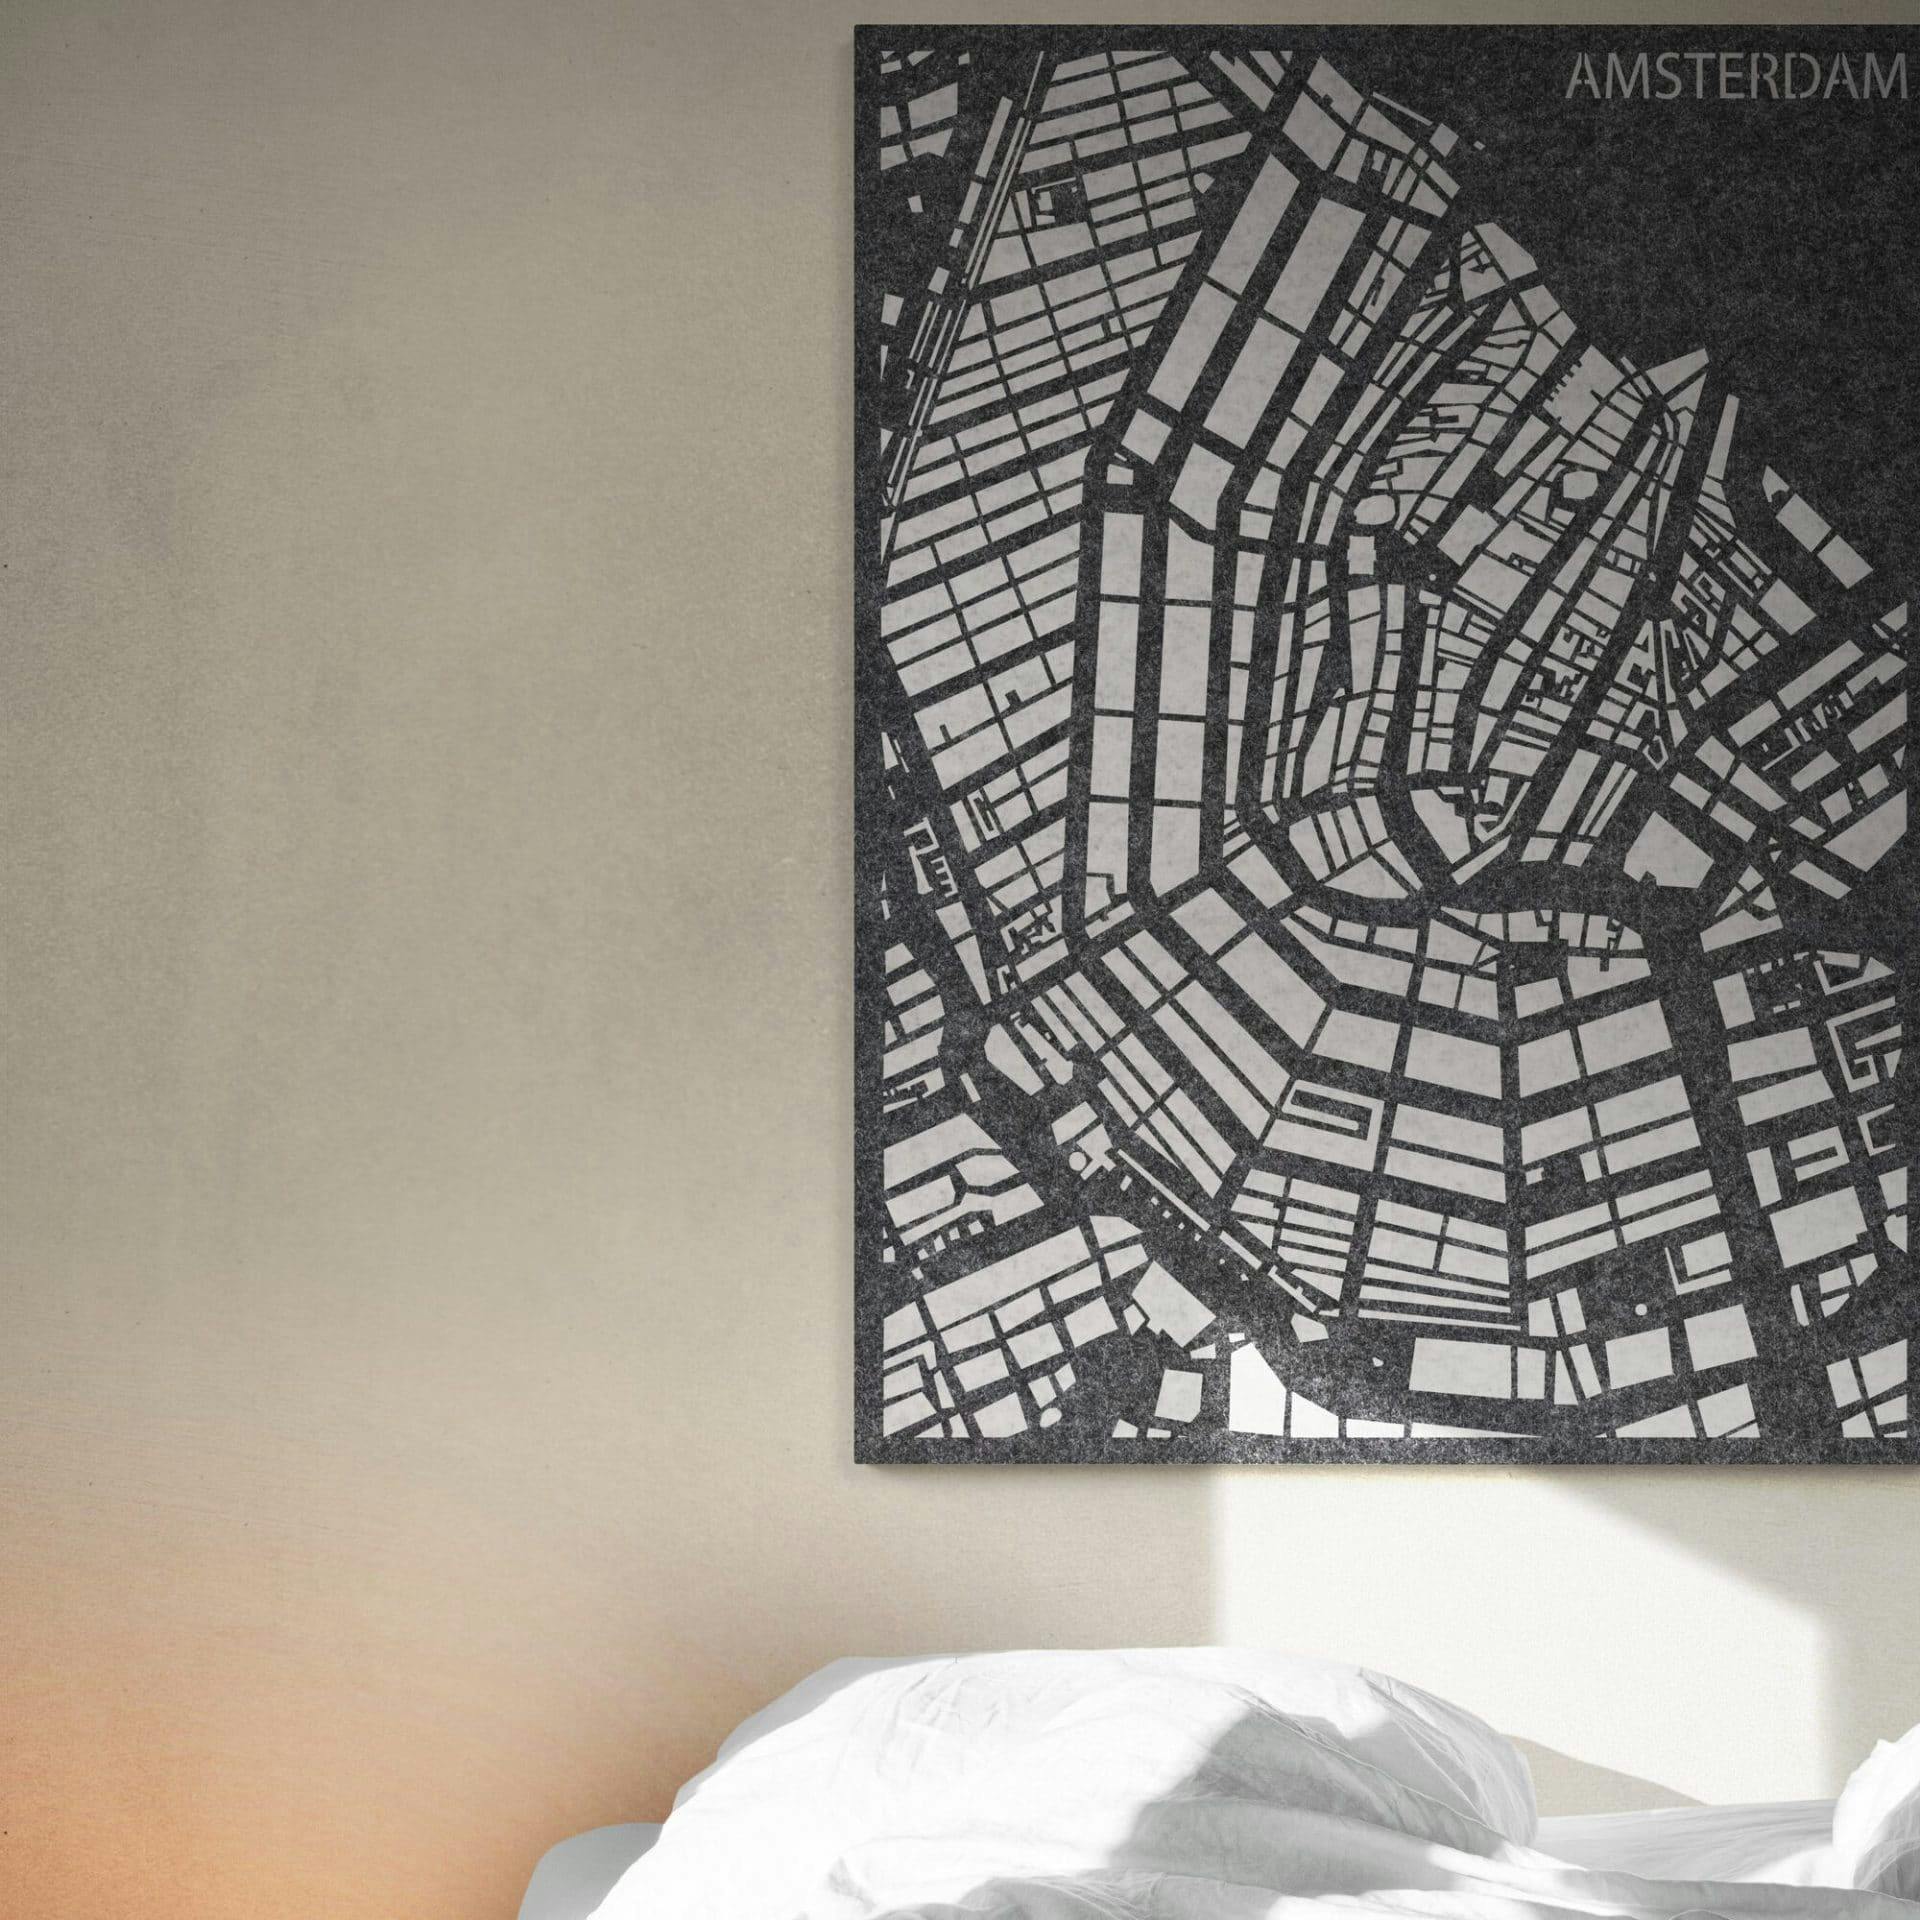 Amsterdam interieur City Map